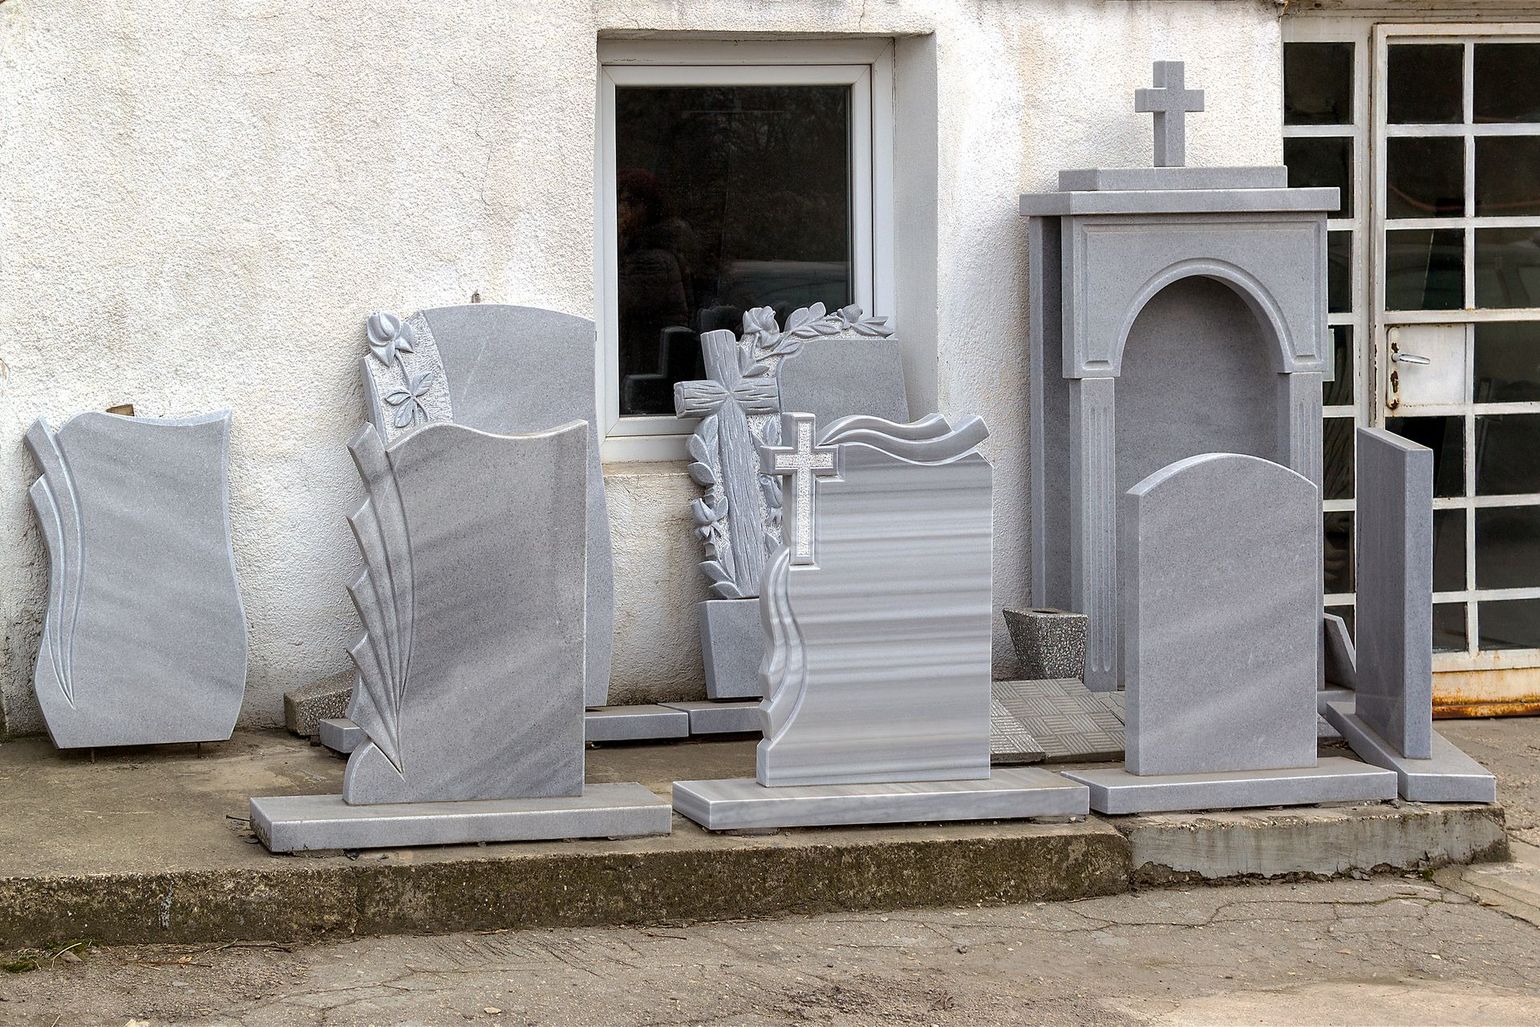 Arte cimiteriale